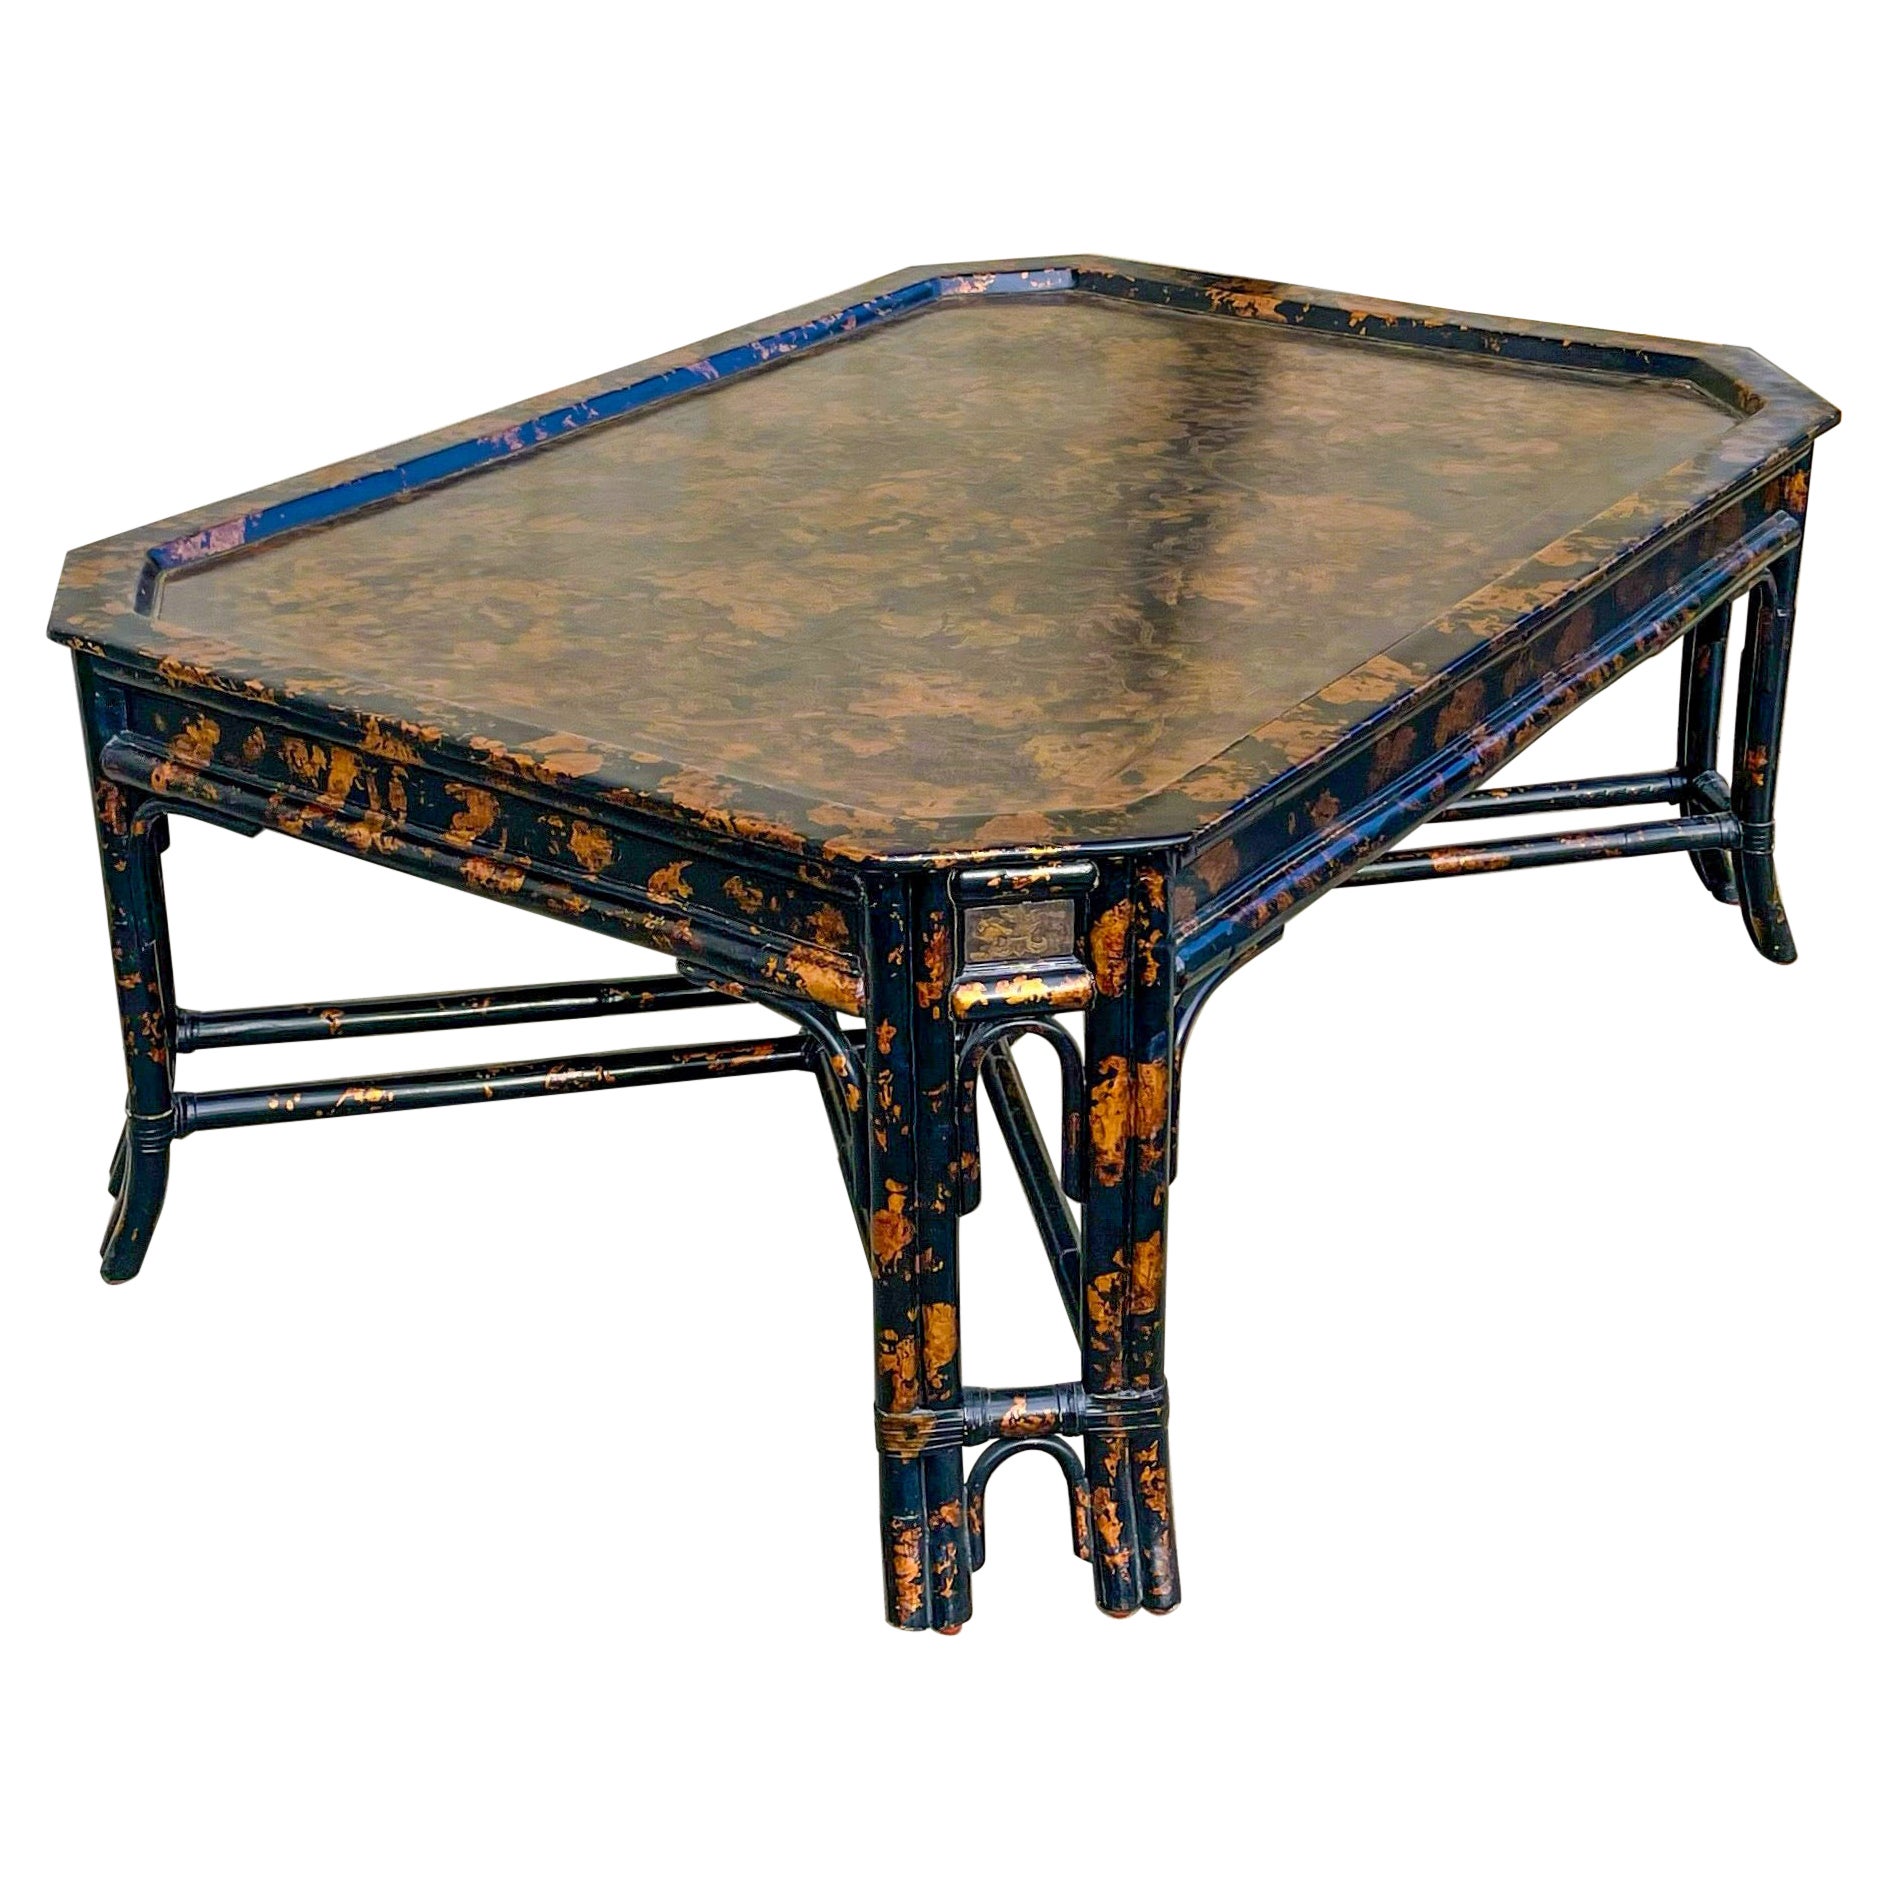 Faux Tortoise Tray Table Form Rattan / Bamboo Coffee Table Att. Maitland-Smith